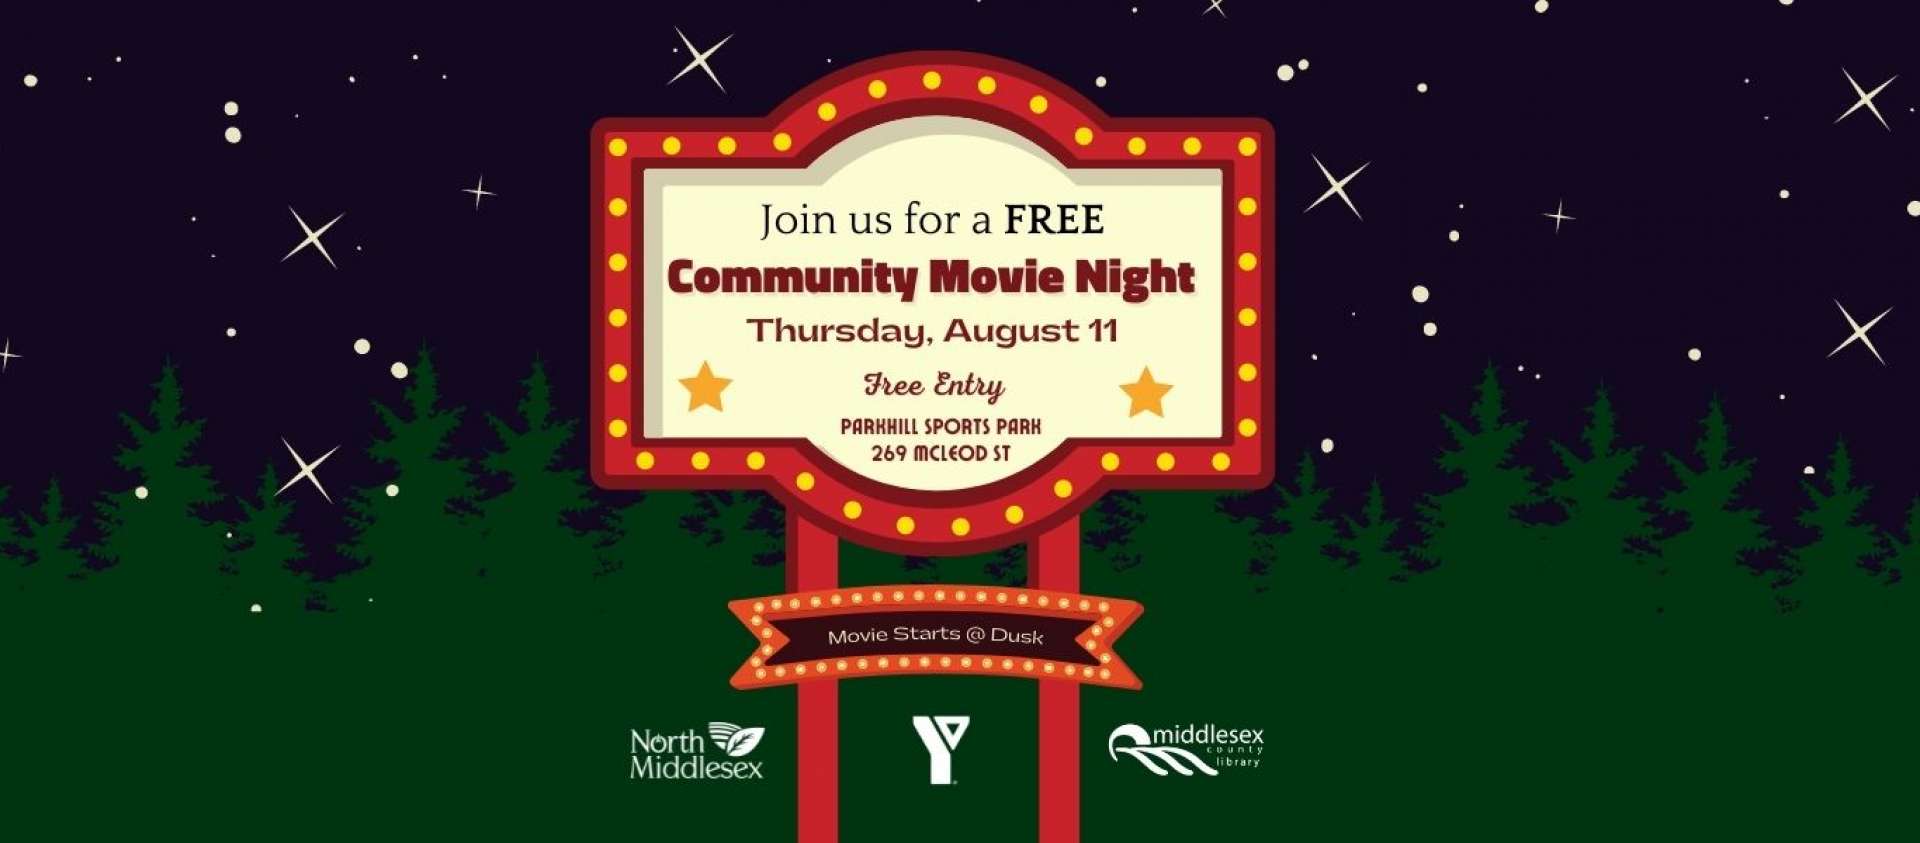 Community Movie Night Poster